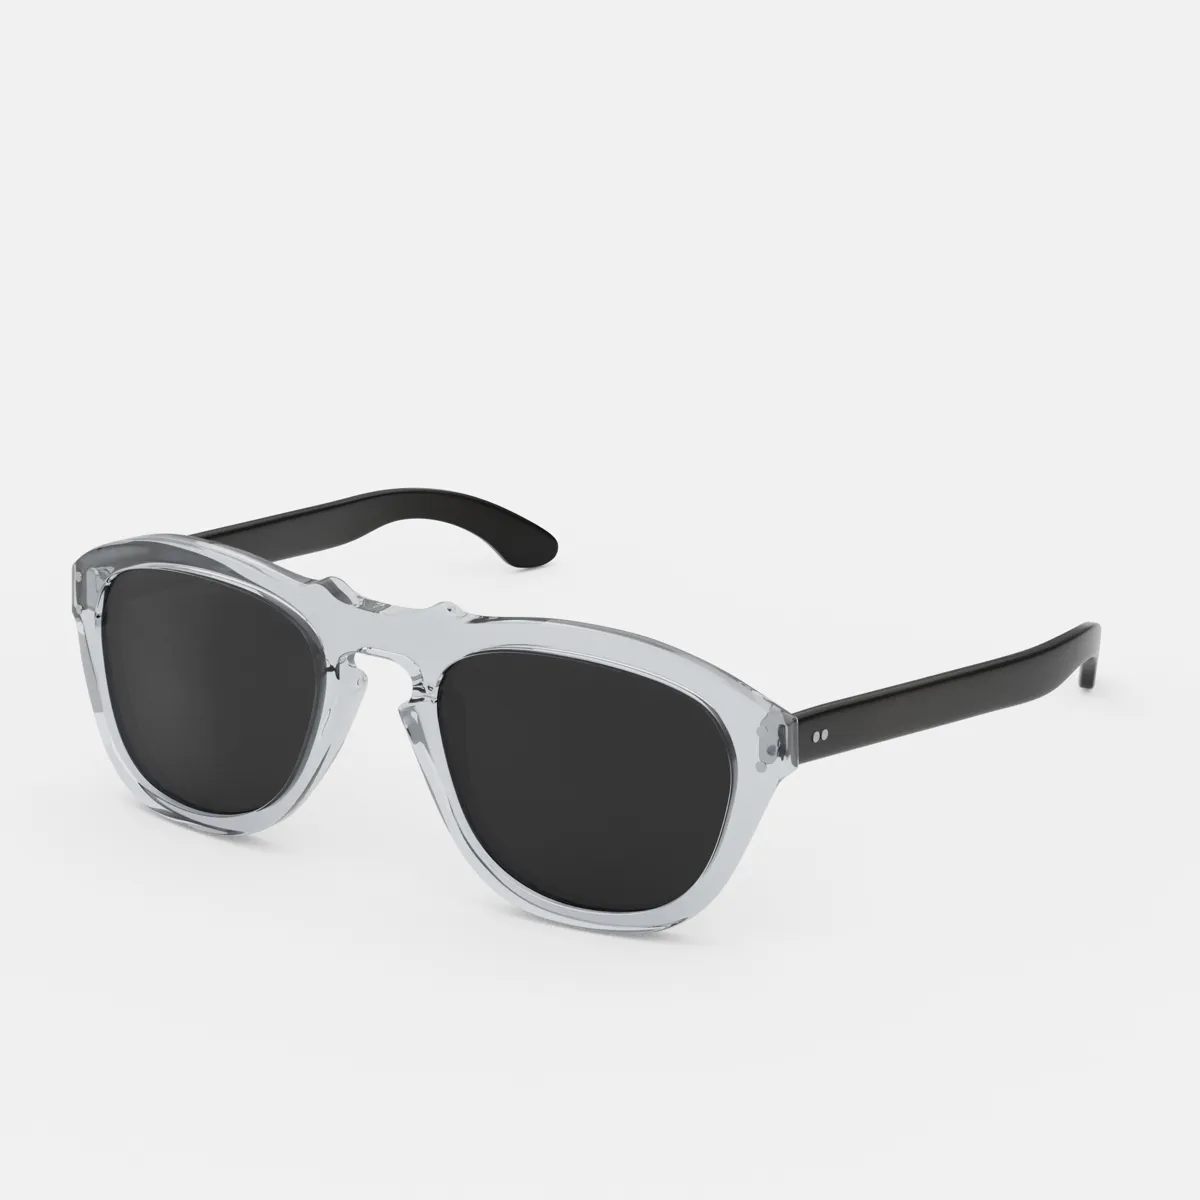 Nebelhorn Aviator sunglasses